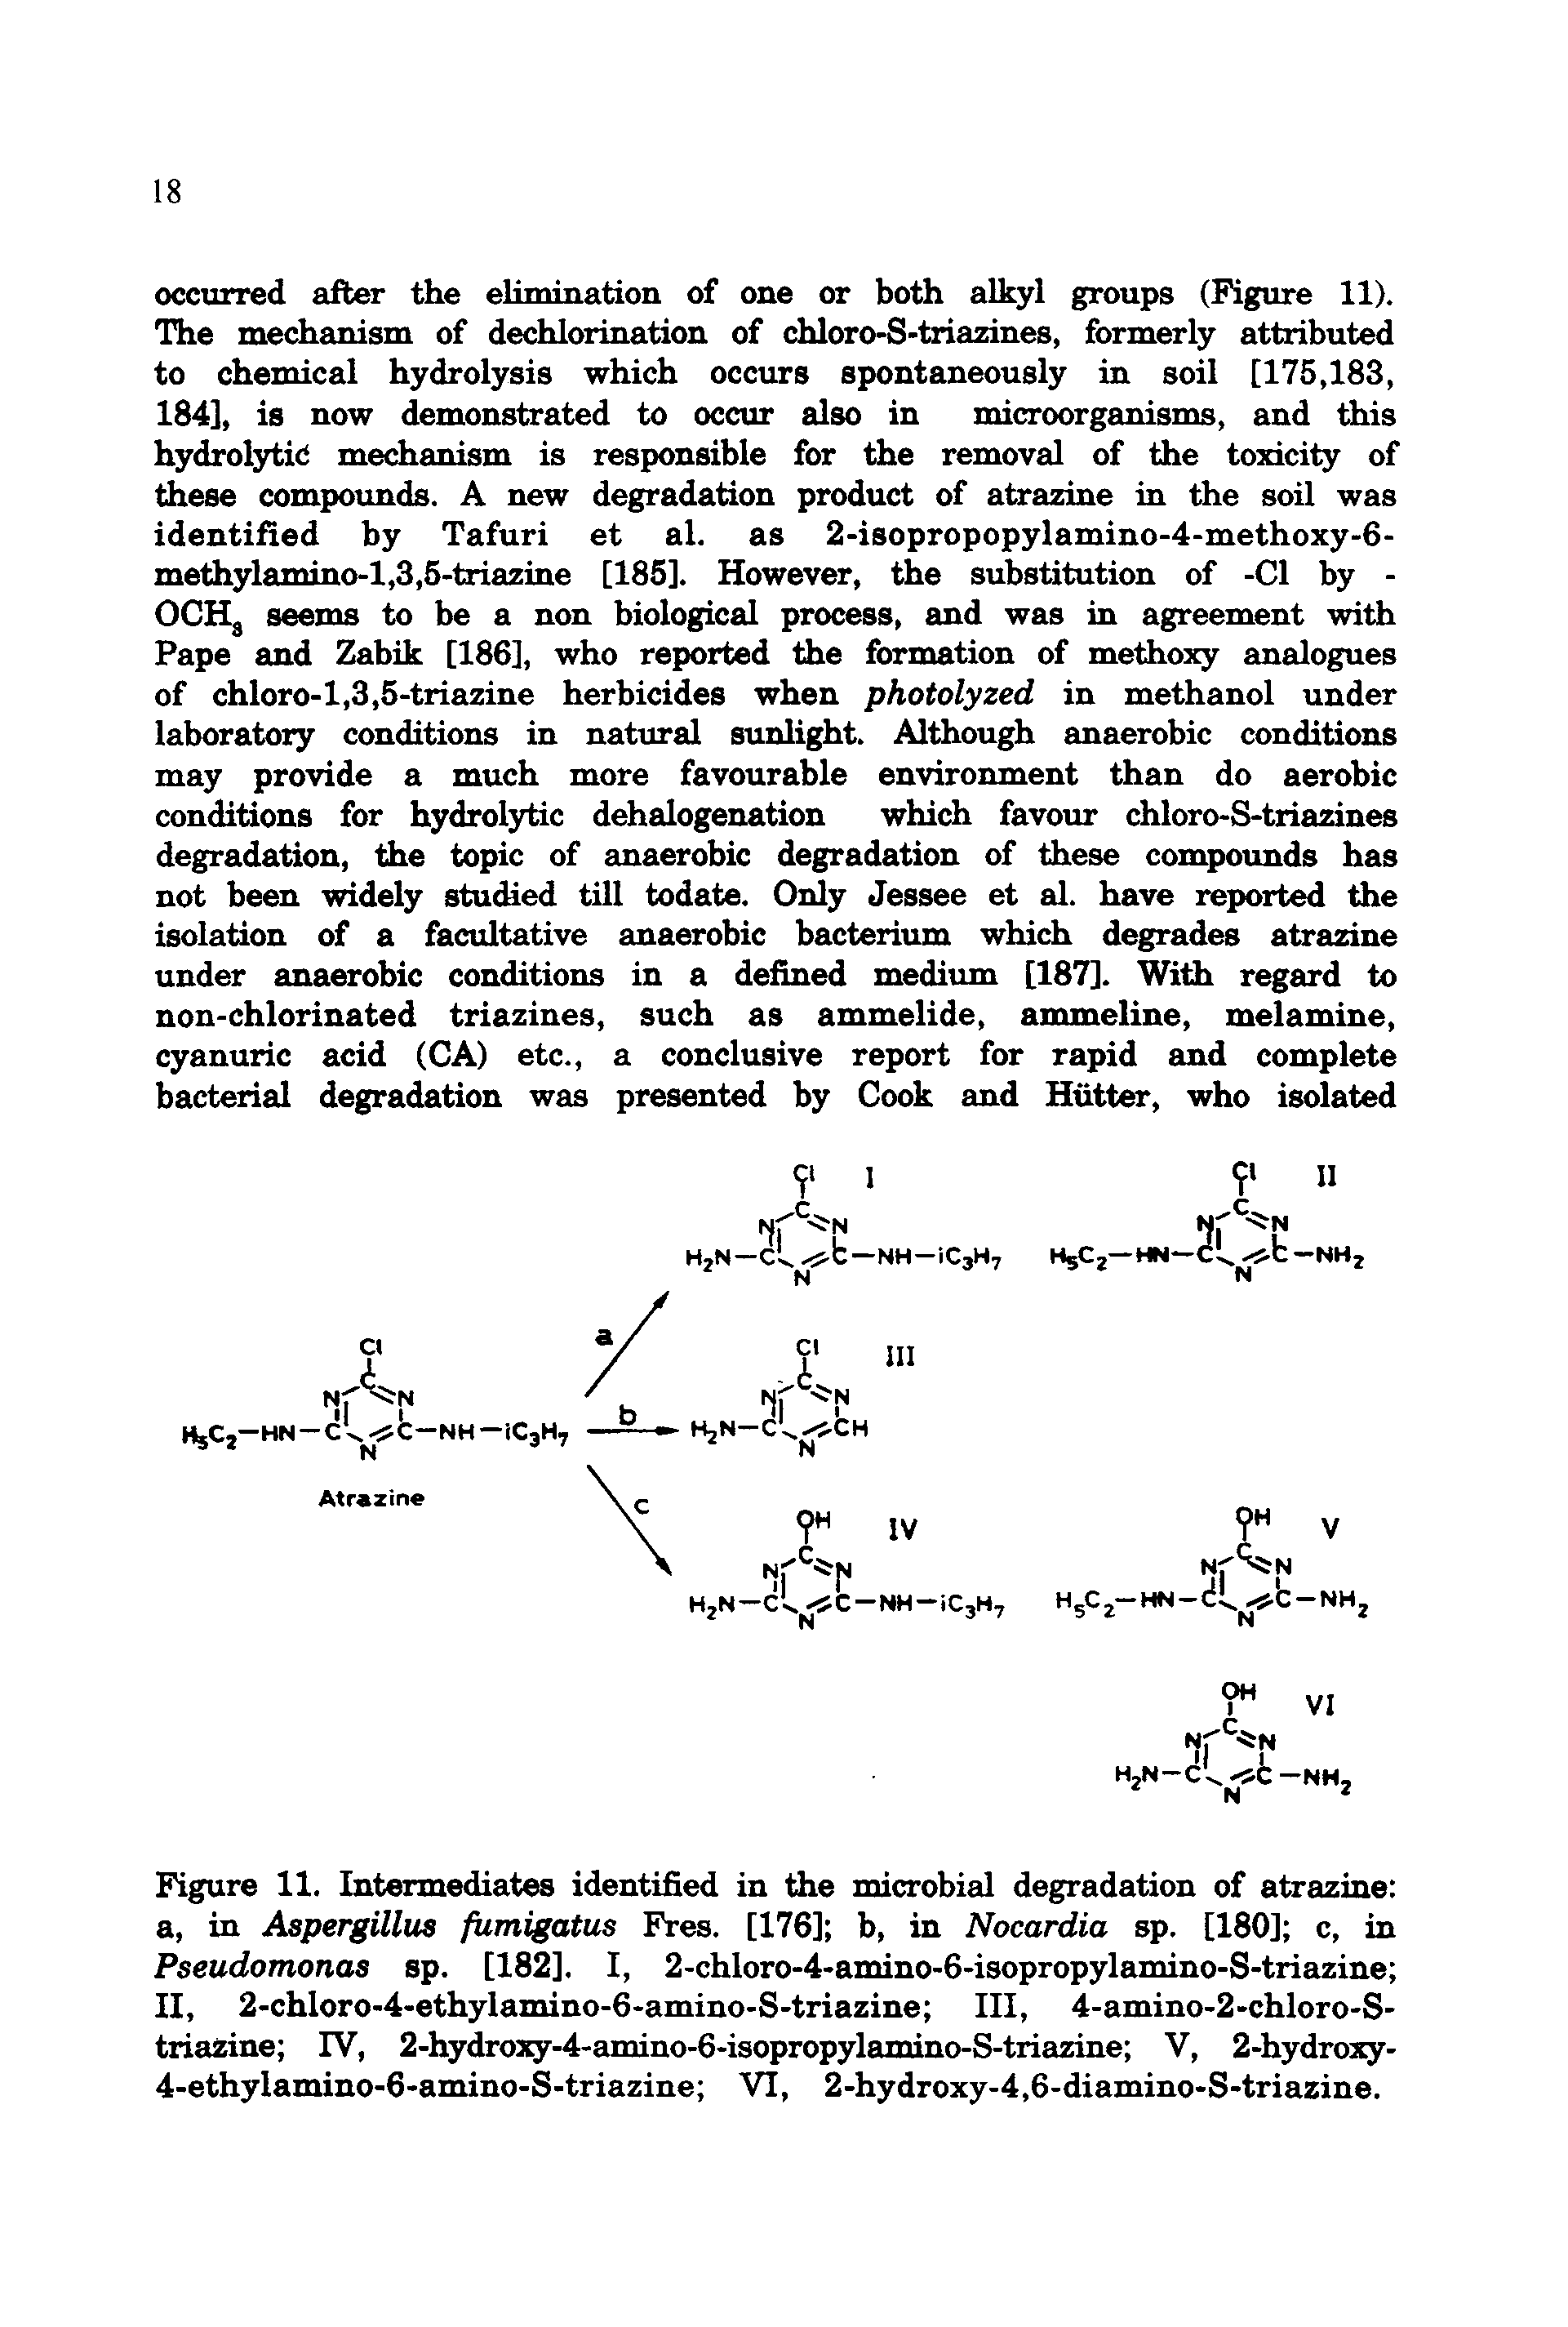 Figure 11. Intermediates identified in the microbial degradation of atrazine a, in Aspergillus fumigatus Fres. [176] b, in Nocardia sp. [180] c, in Pseudomonas sp. [182]. I, 2-chloro-4-amino-6-isopropylamino-S-triazine II, 2-chloro-4-ethylamino-6-amino-S-triazine III, 4-amino-2-chloro-S-triasine IV, 2-hydro3y-4-amino-6-isopropylamino-S-triazine V, 2-hydroxy-4-ethylamino-6-amino-S-triazine VI, 2-hydroxy-4,6-diamino-S-triazine.